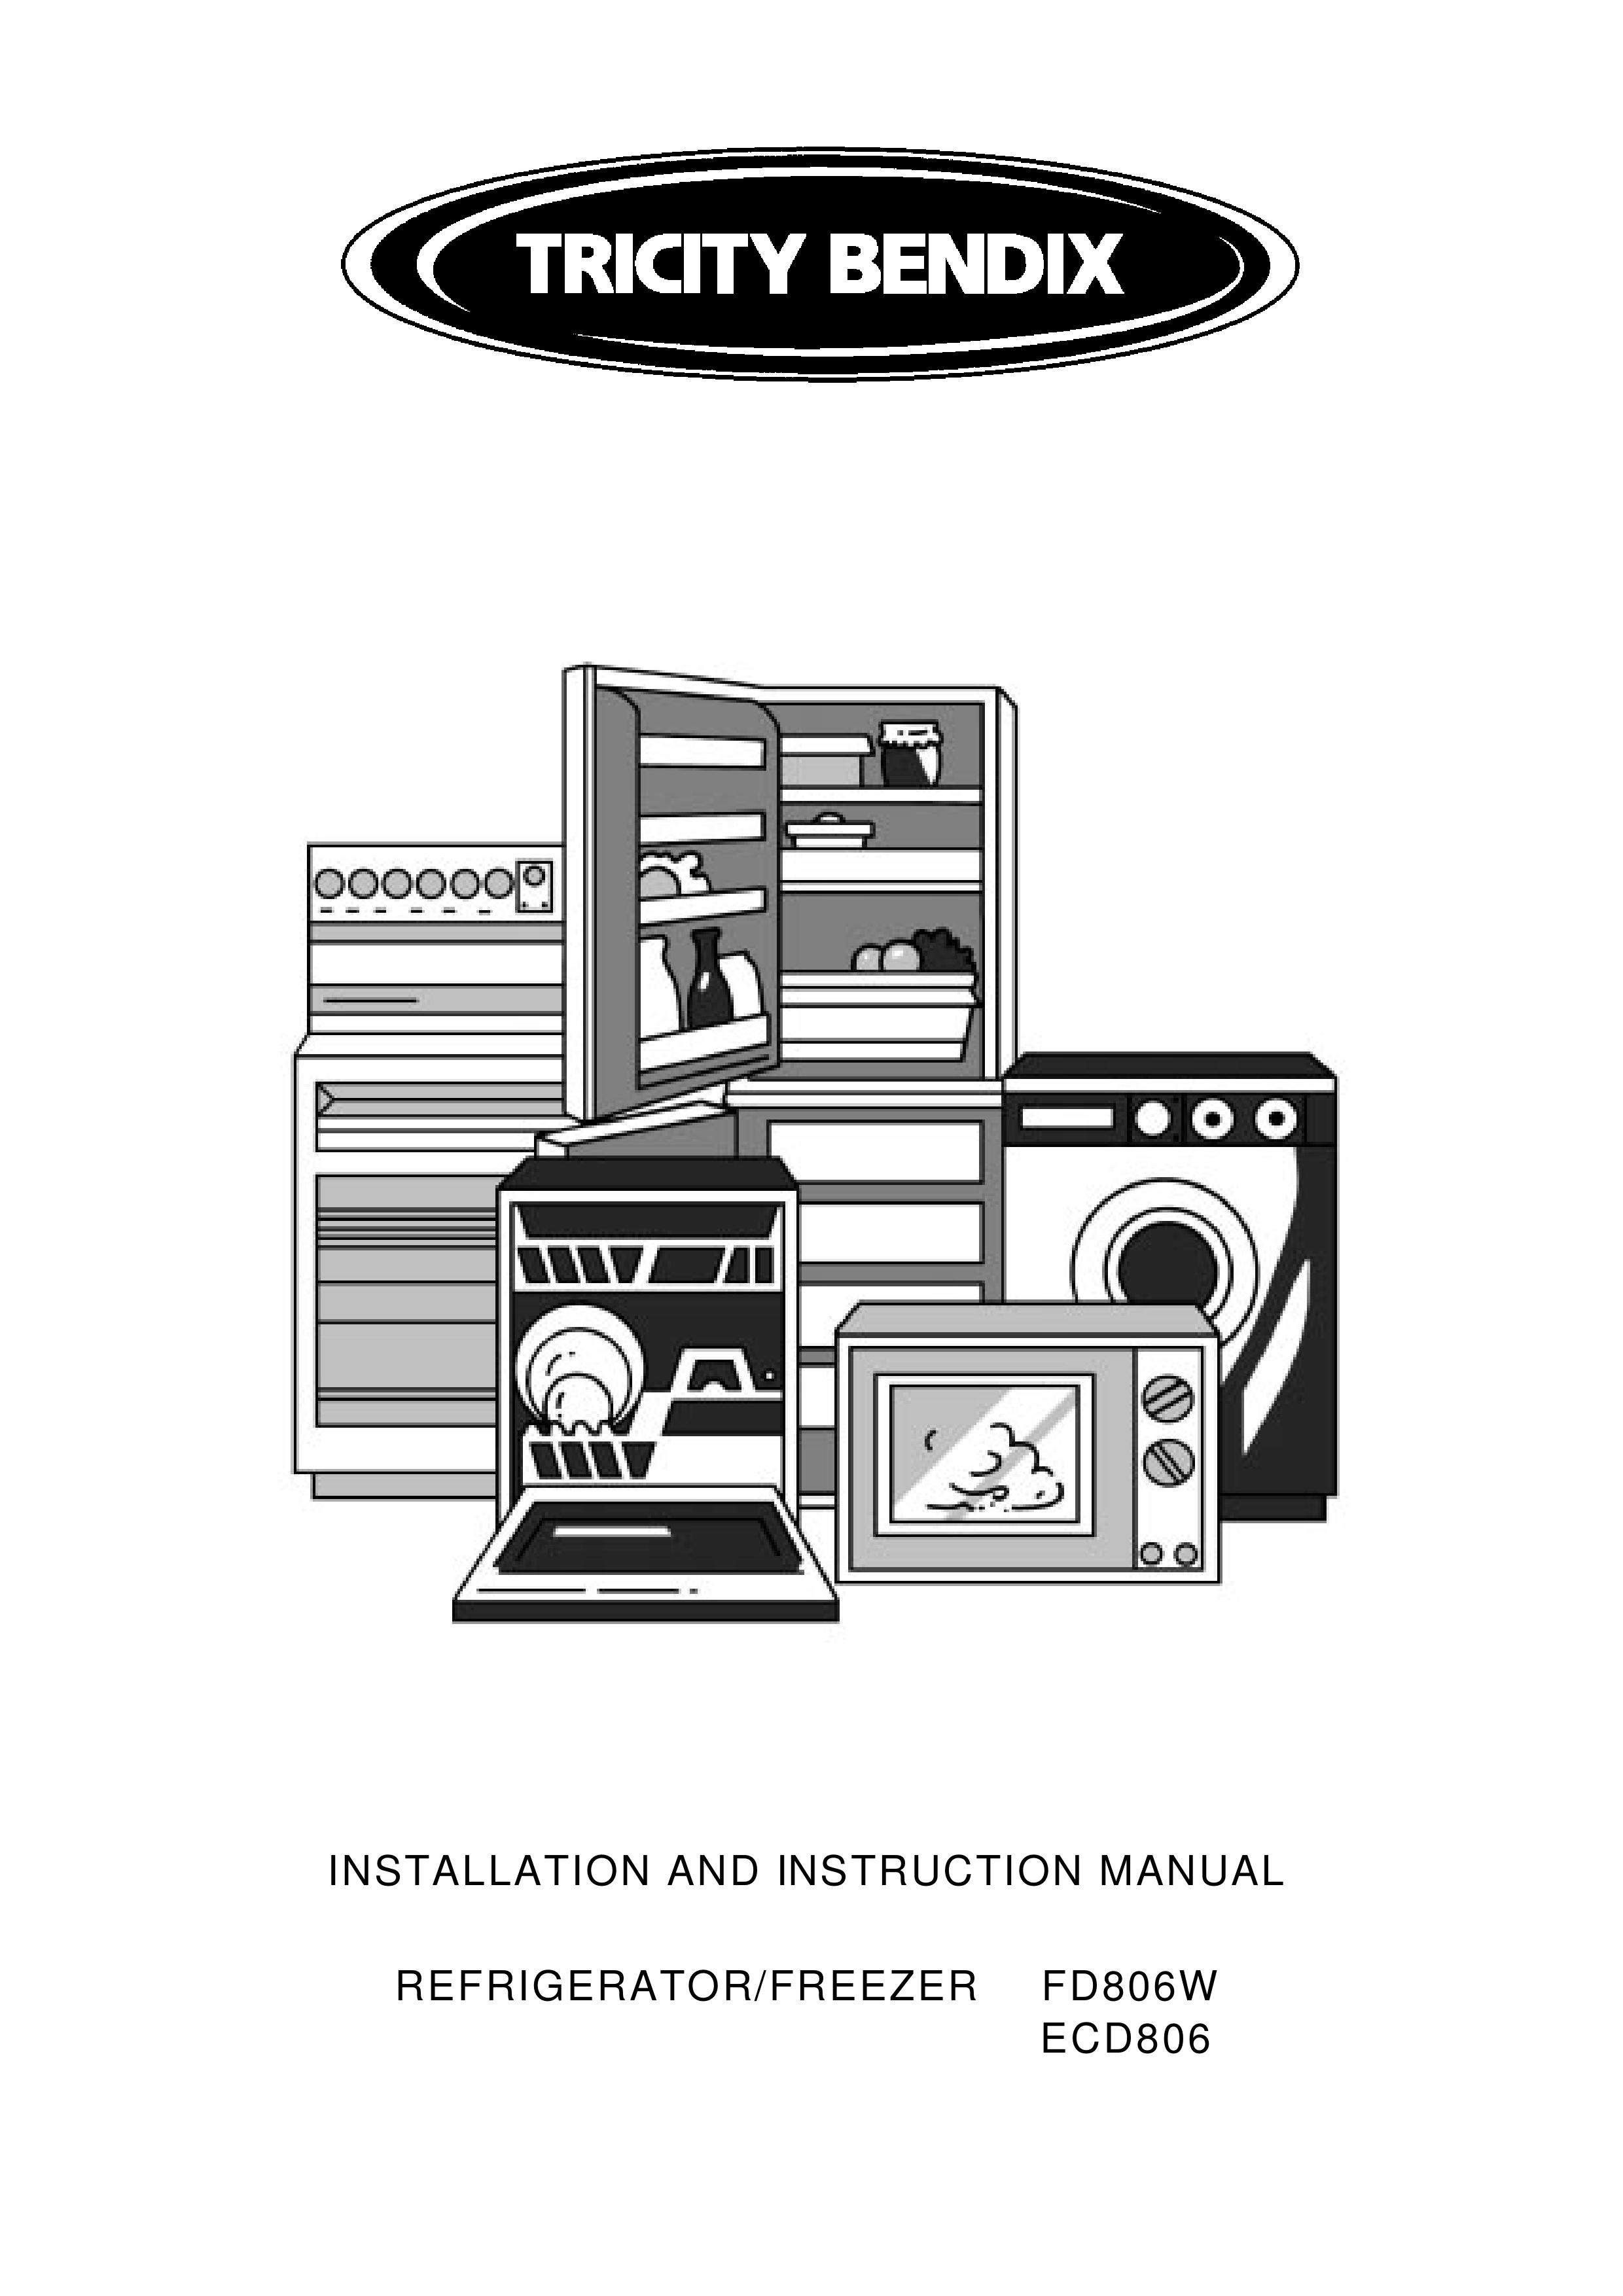 Tricity Bendix ECD806 Refrigerator User Manual